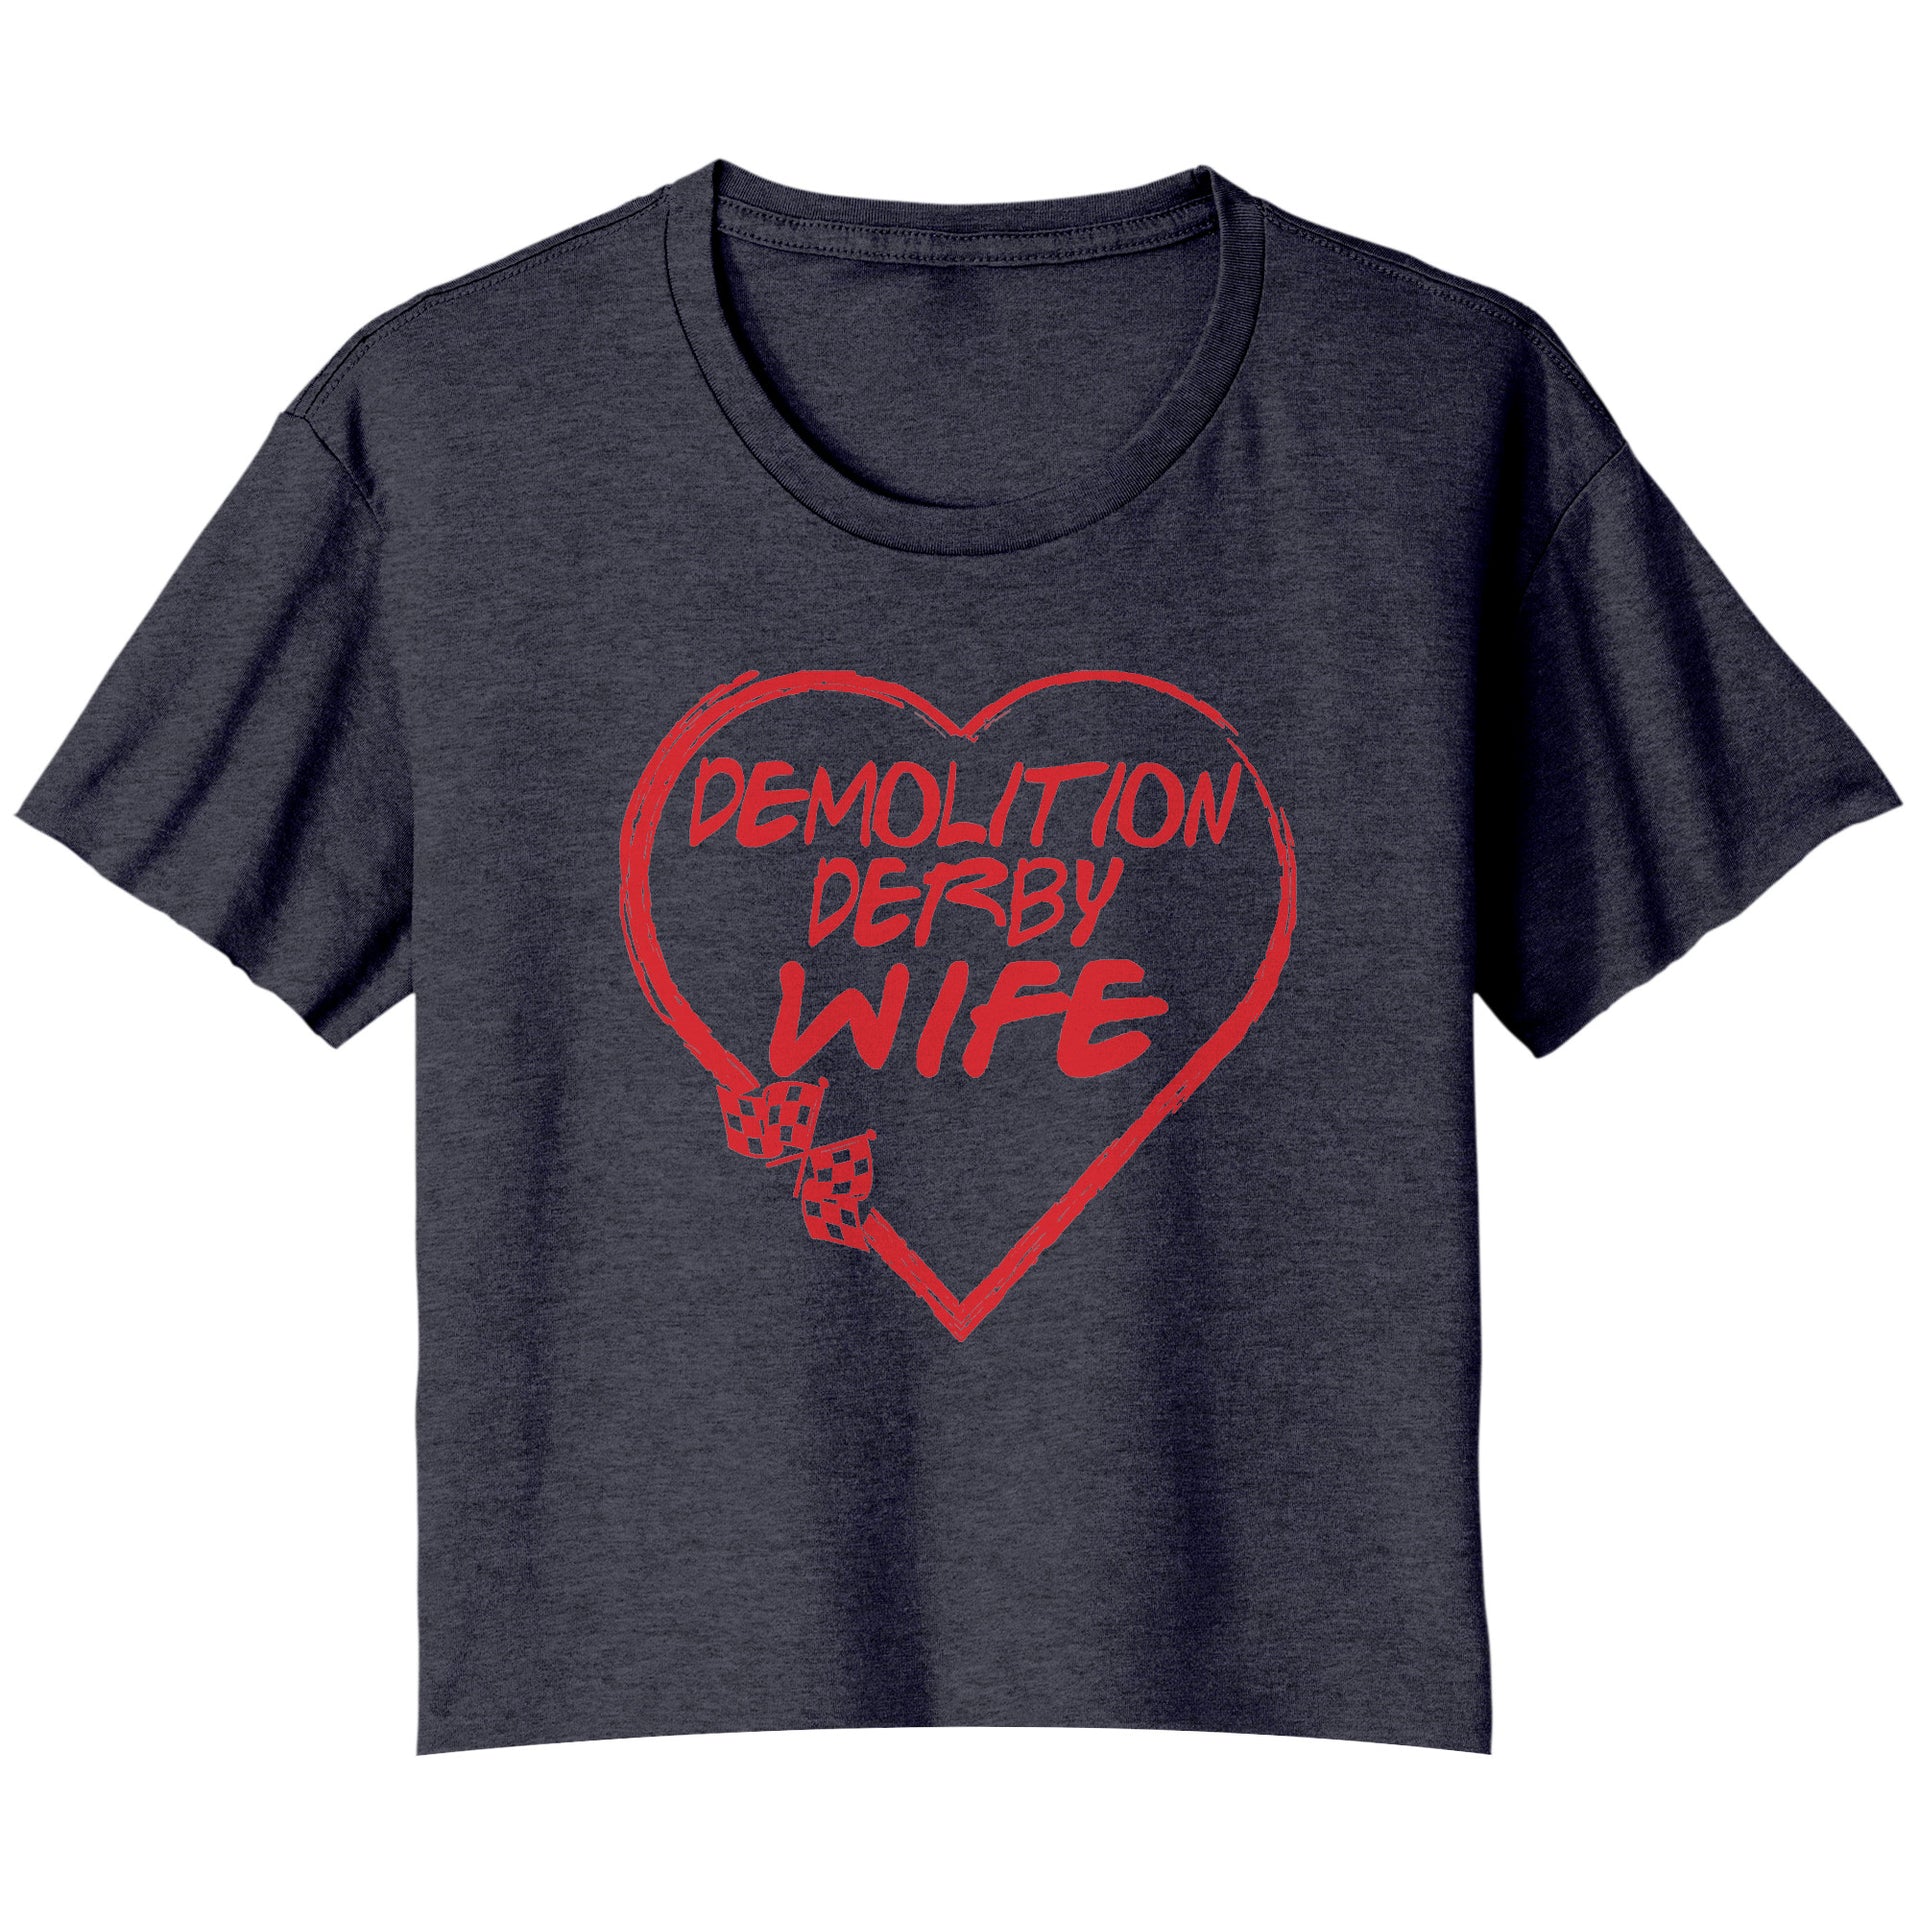 Demolition Derby Wife Heart T-Shirts